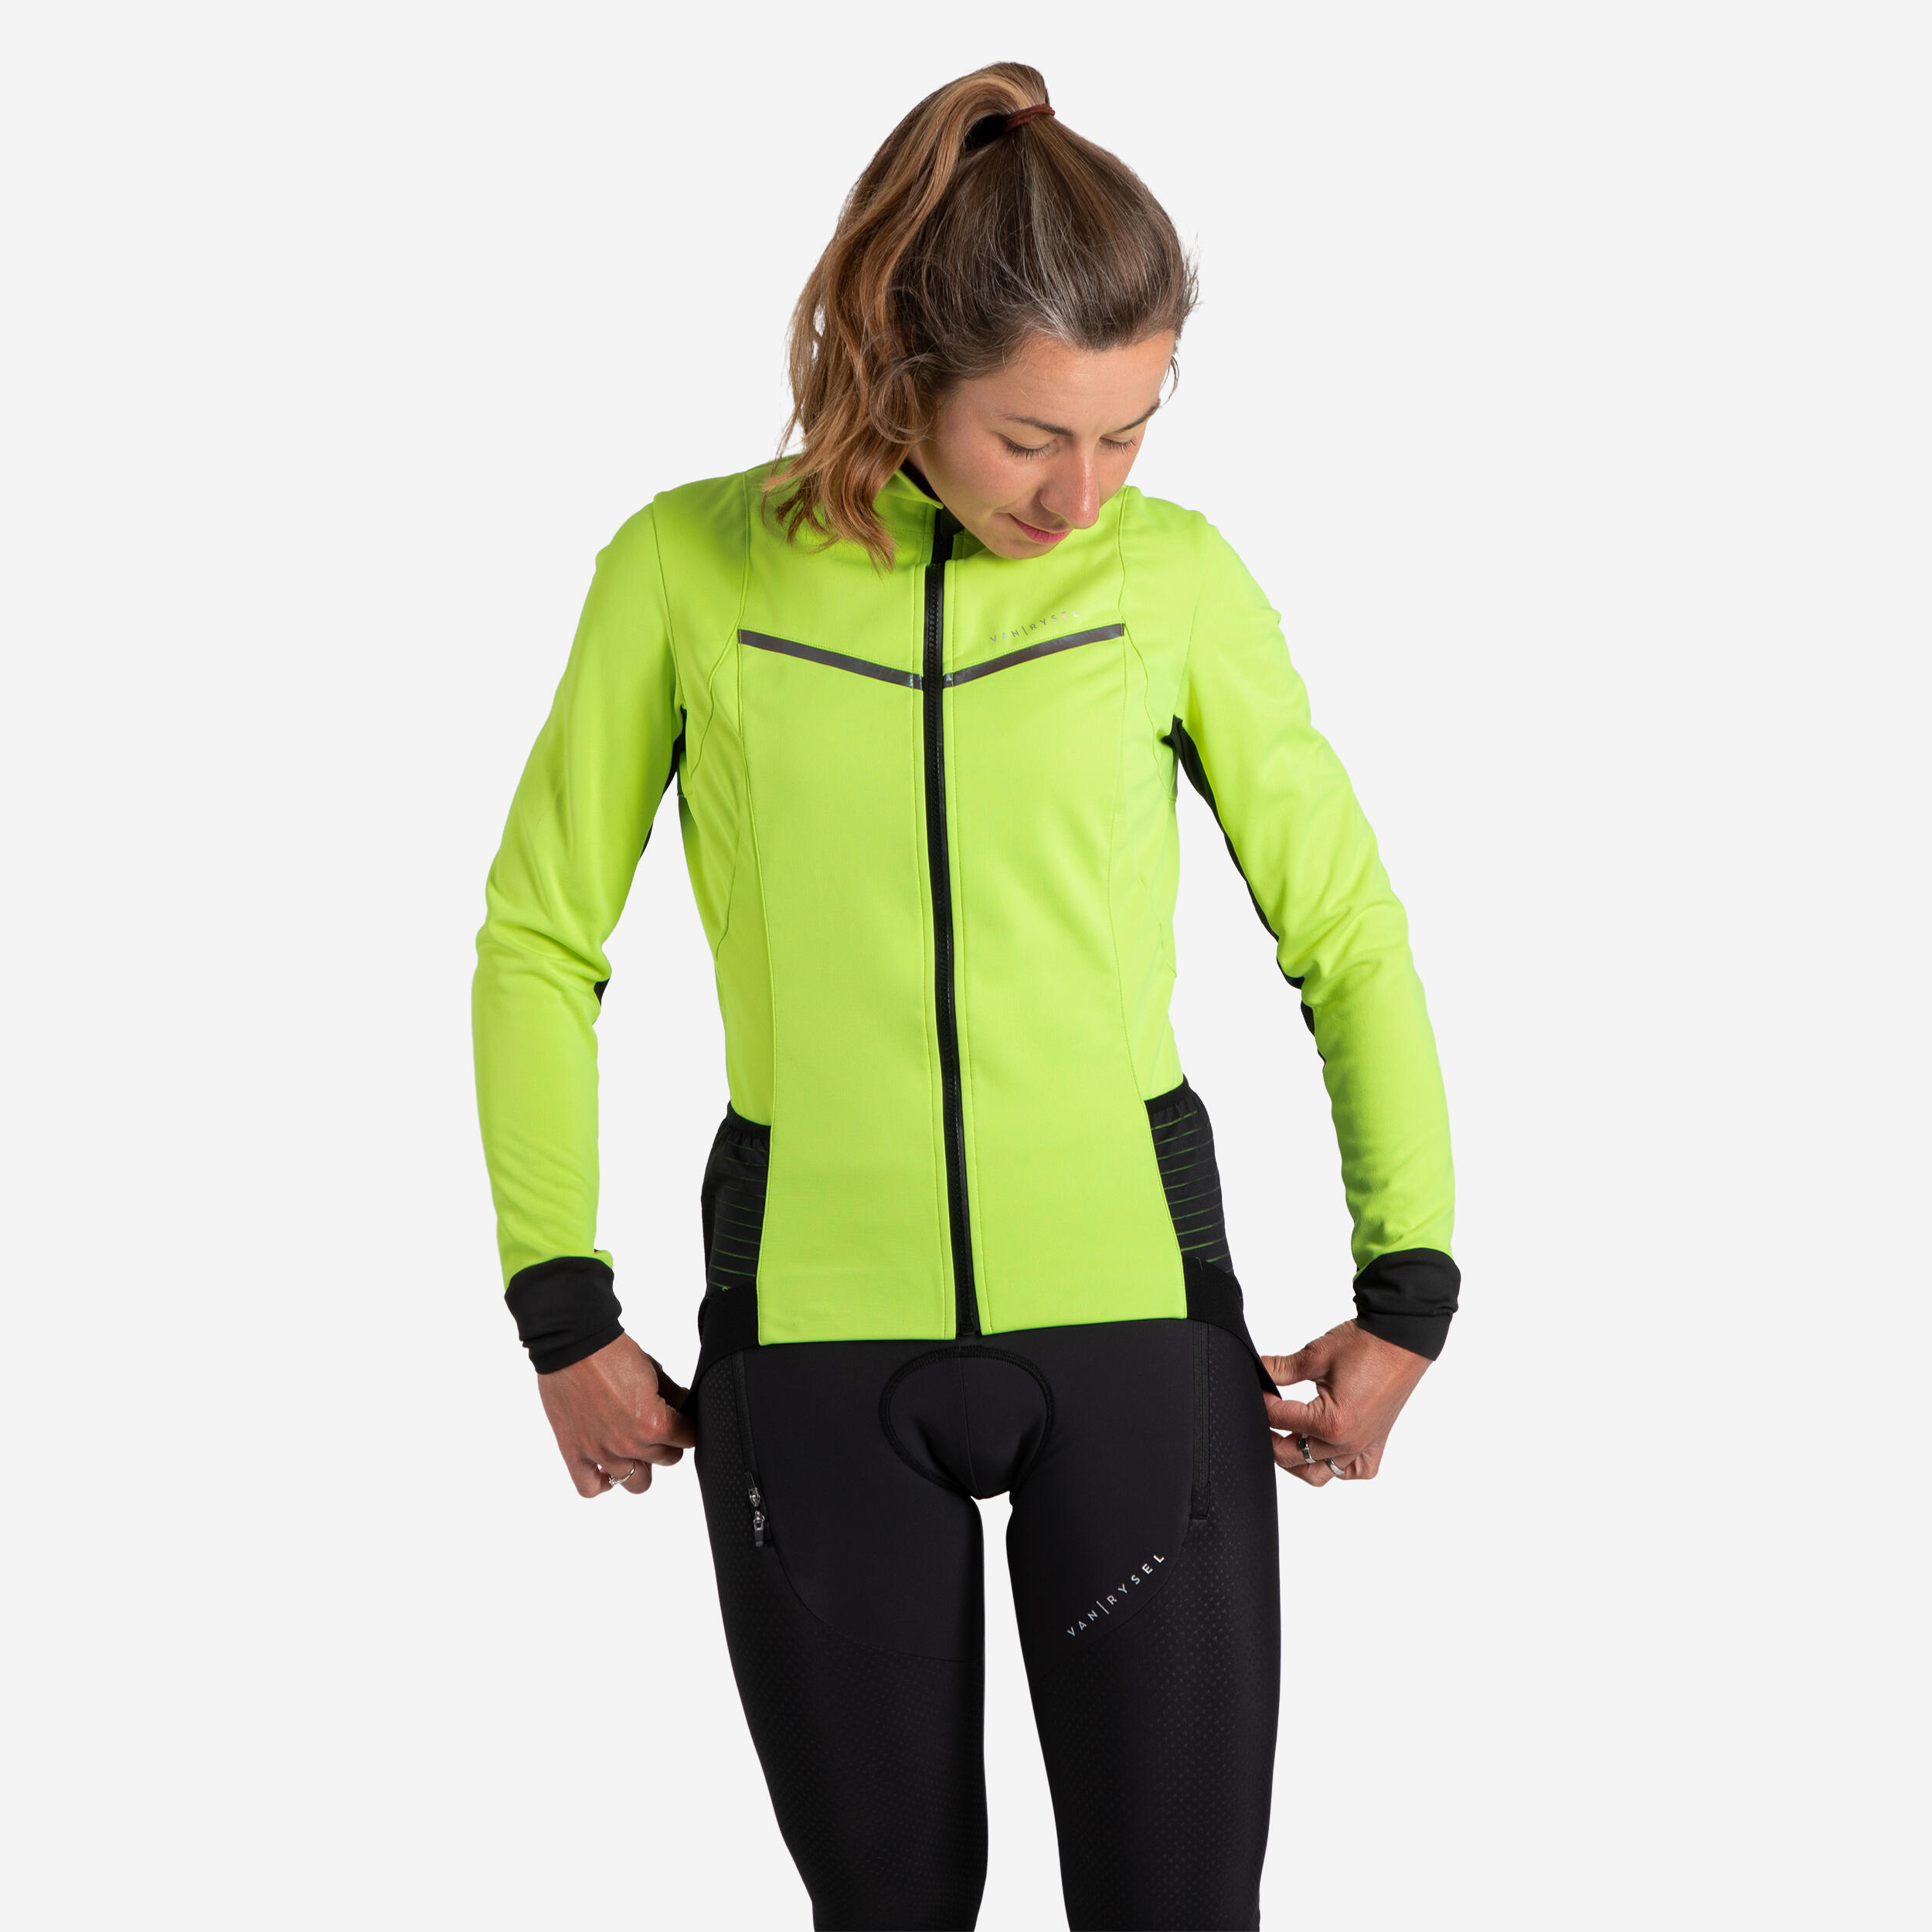 VAN RYSEL Women's Sportive Cold Weather Jacket - Yellow